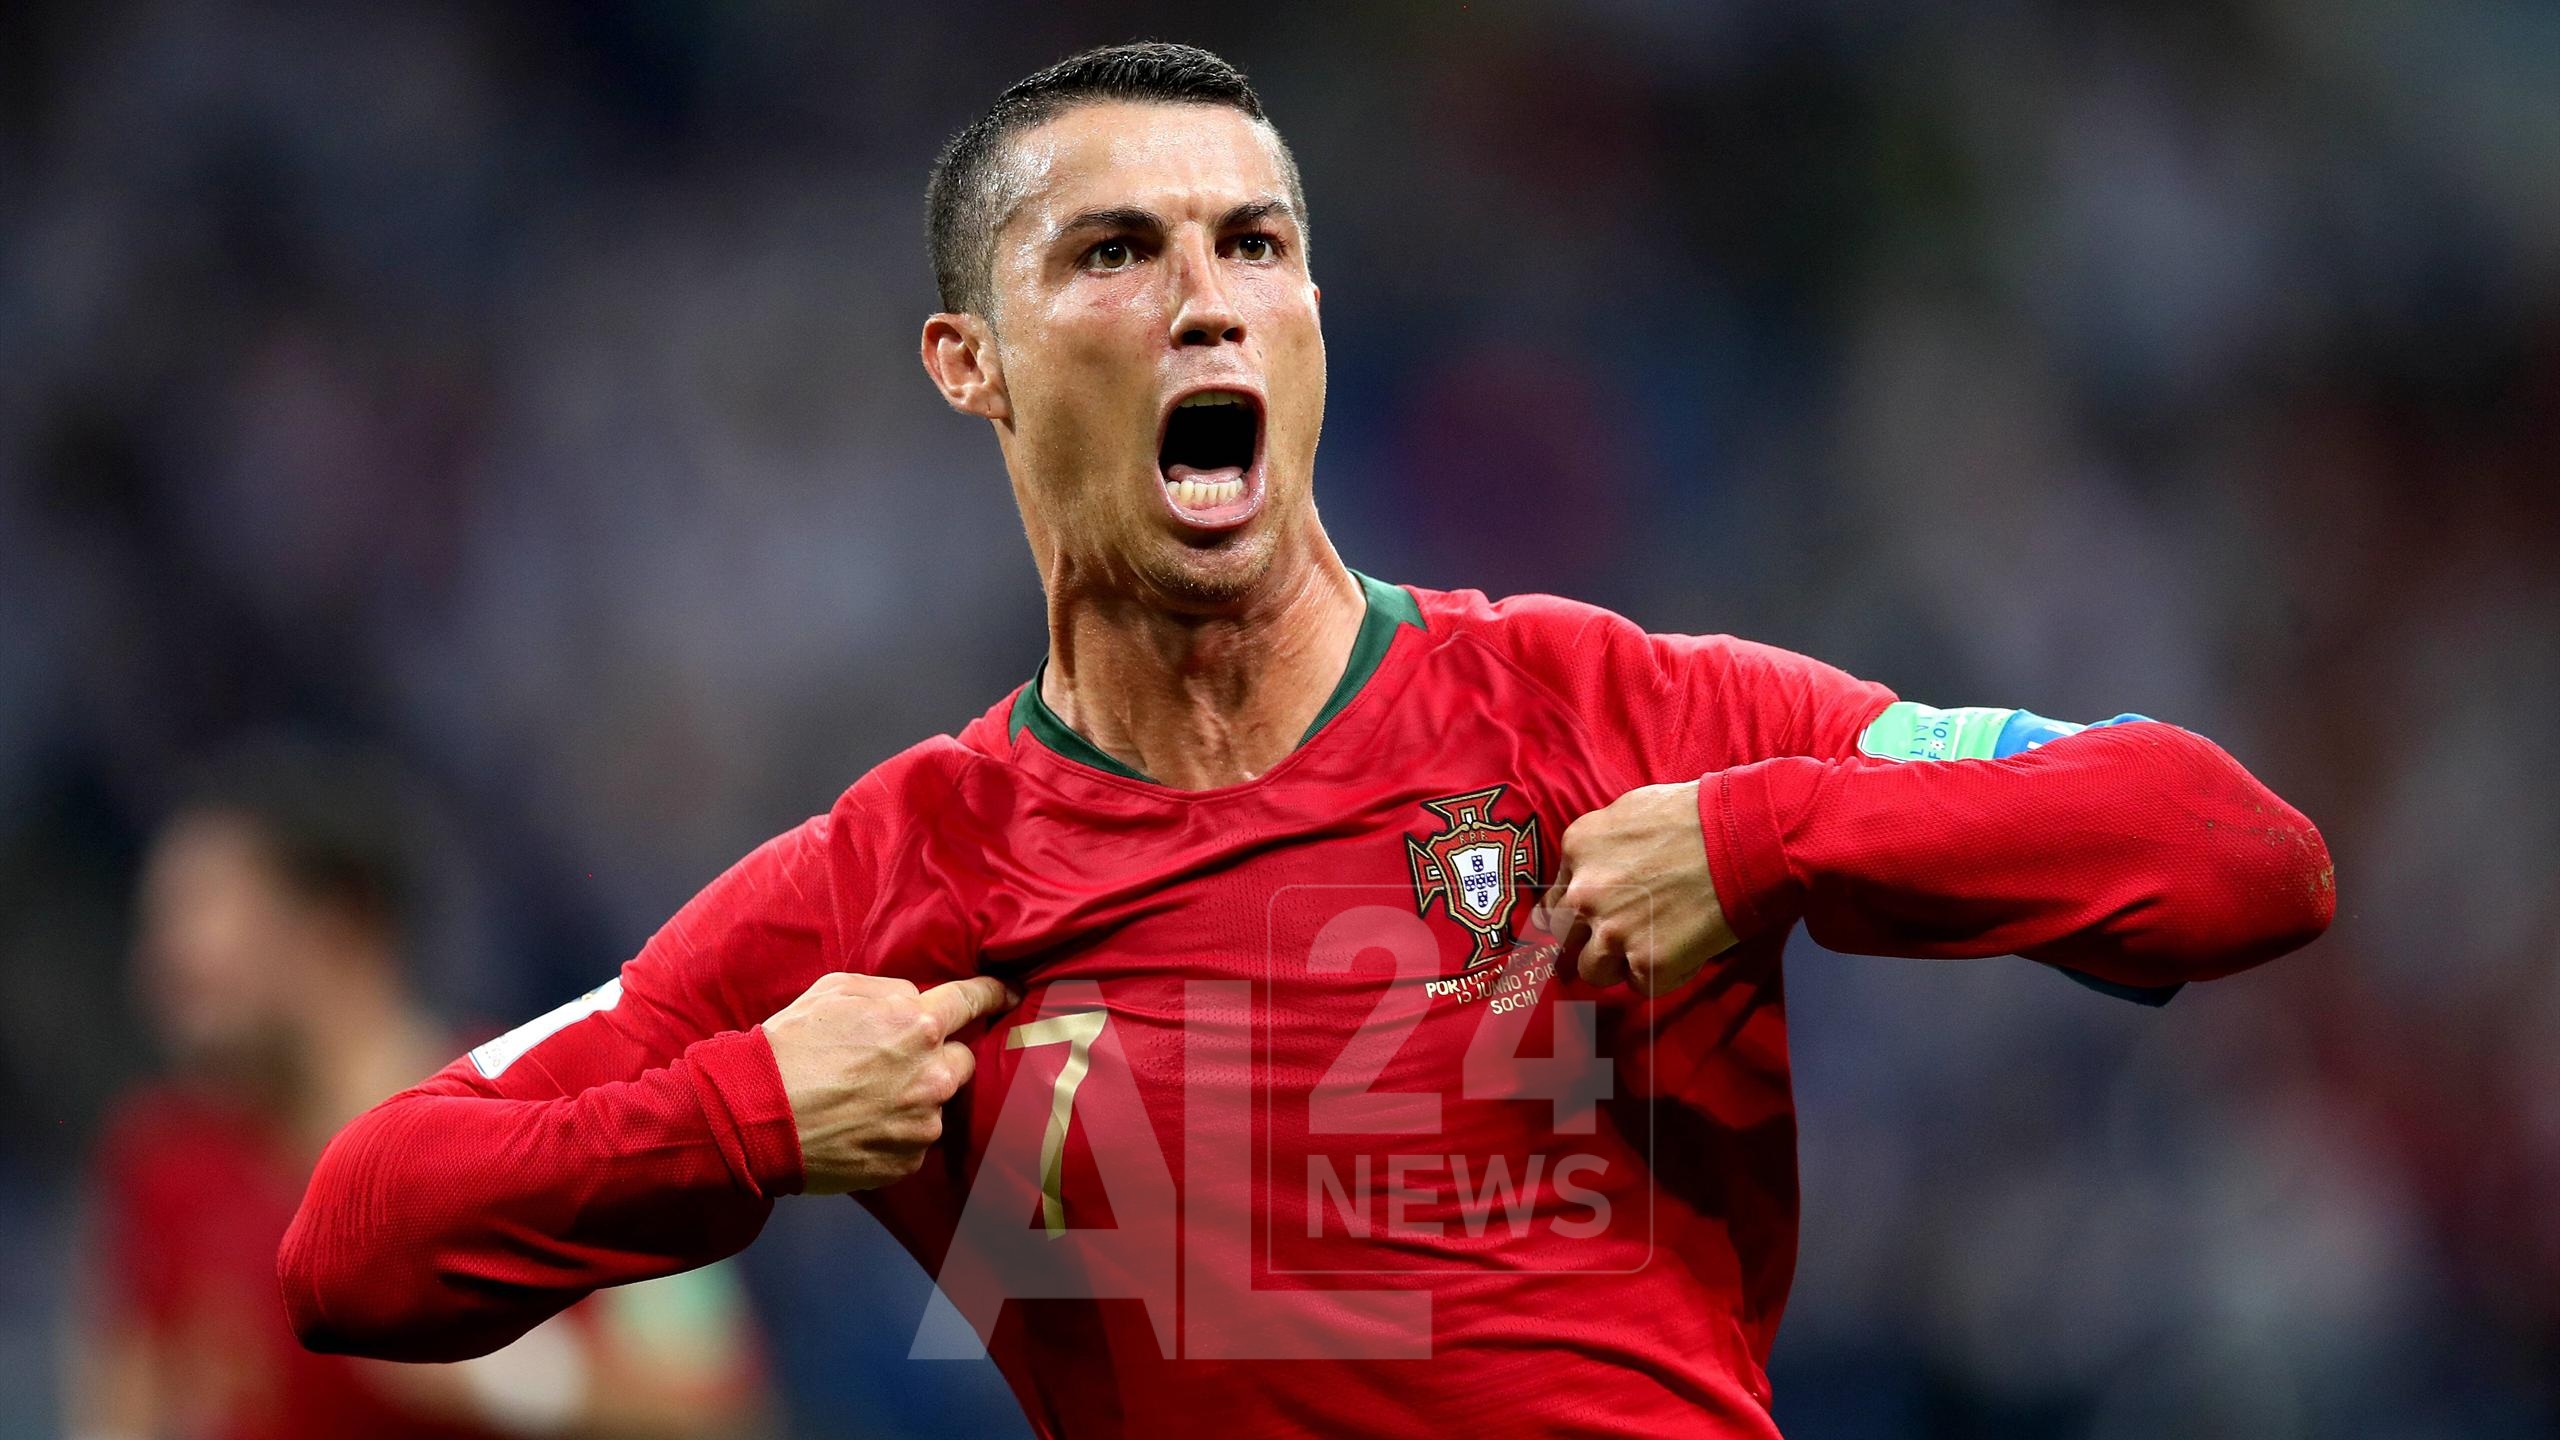 Cristiano Ronaldo buteur sur cinq Coupes du monde, un record salué